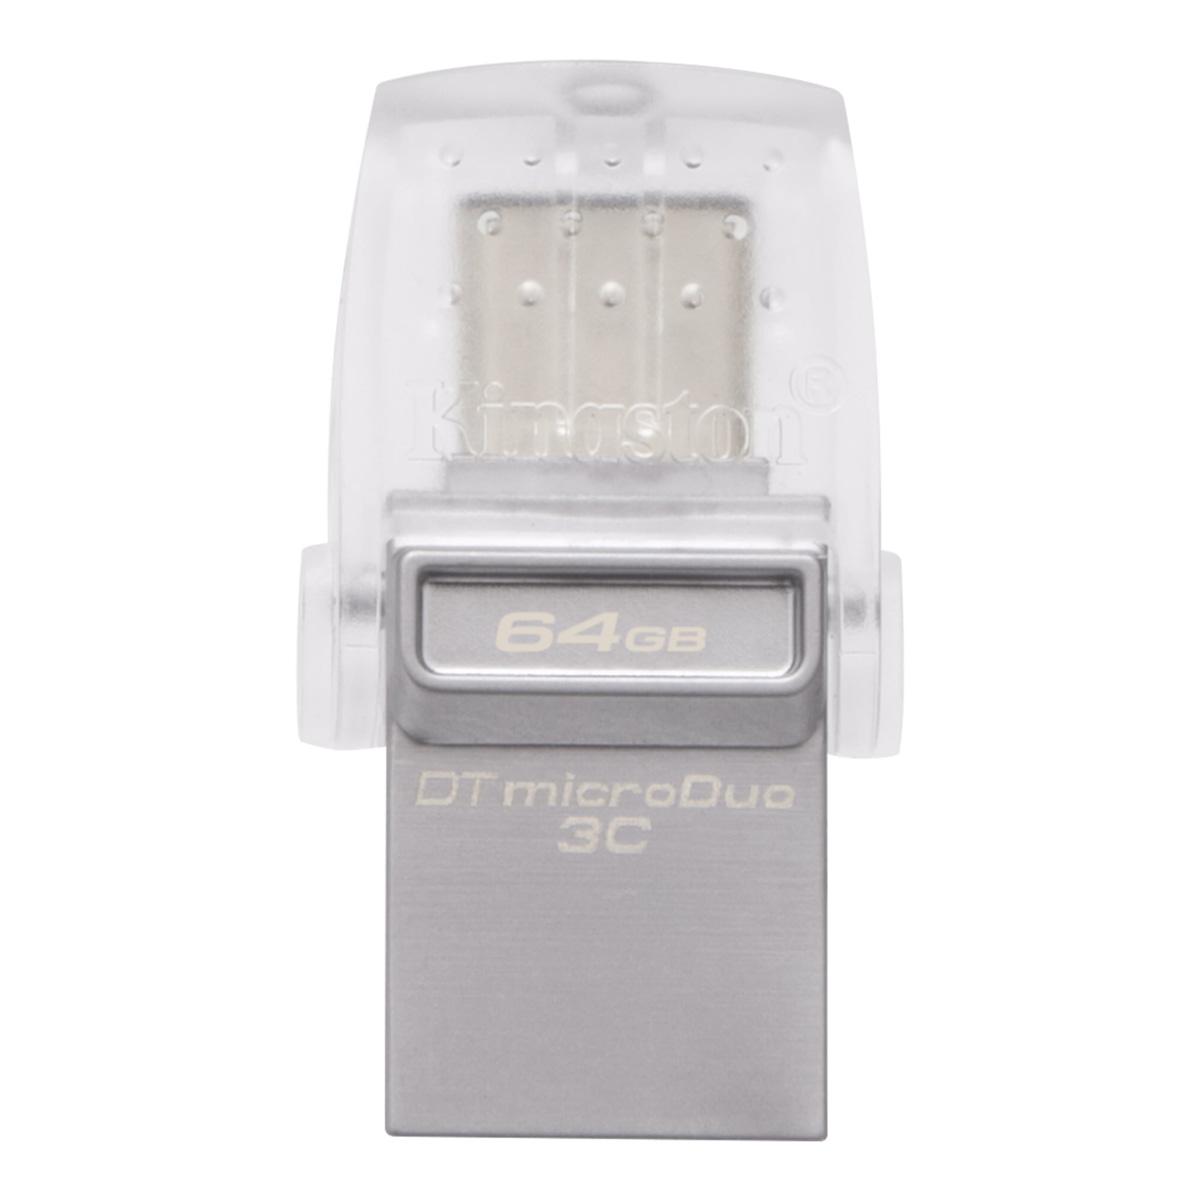 Kingston DataTraveler microDuo 3C USB and USB Type-C Flash Drive for $9.99 Shipped